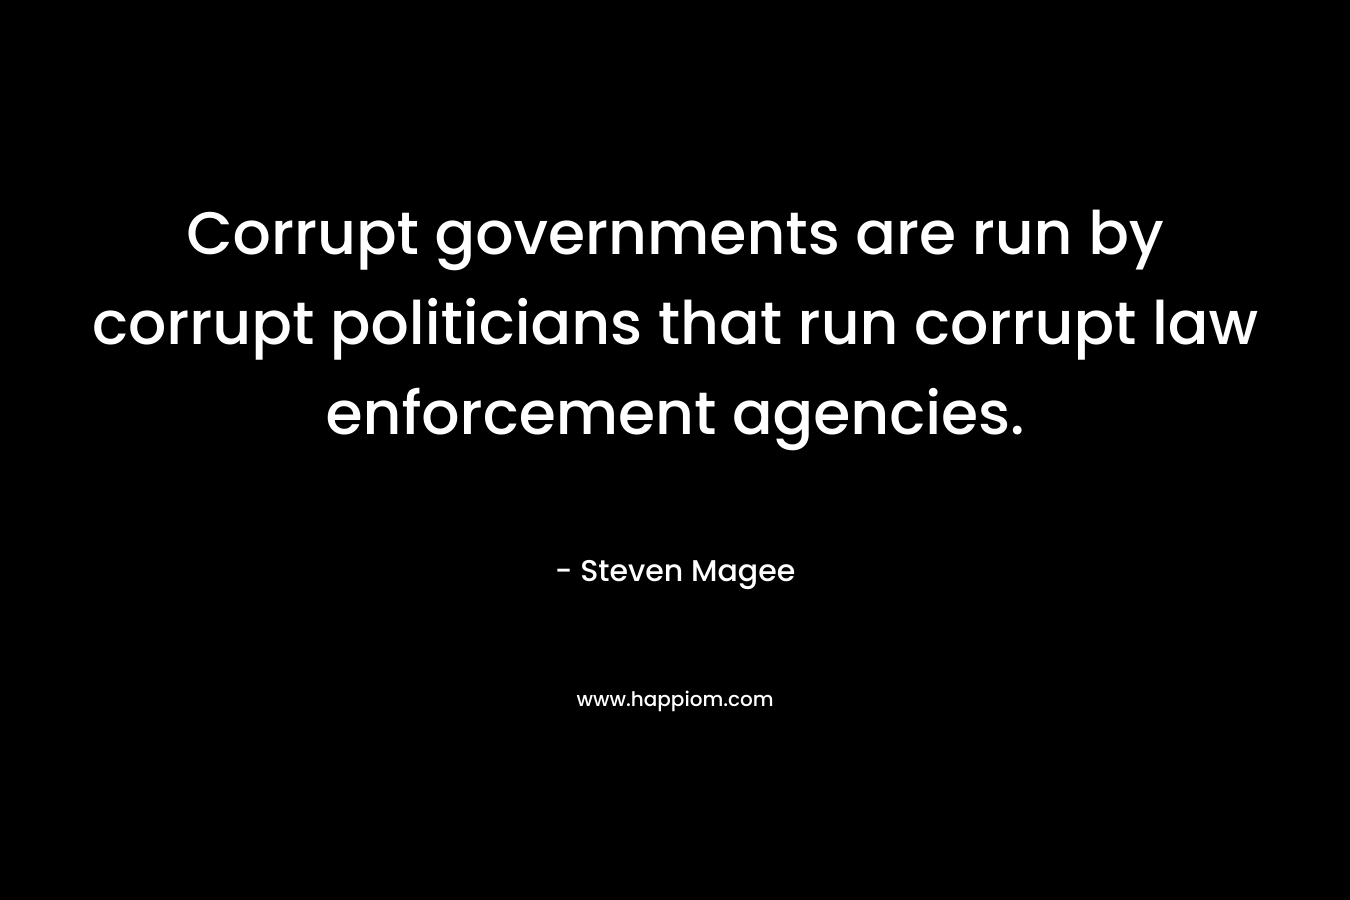 Corrupt governments are run by corrupt politicians that run corrupt law enforcement agencies.